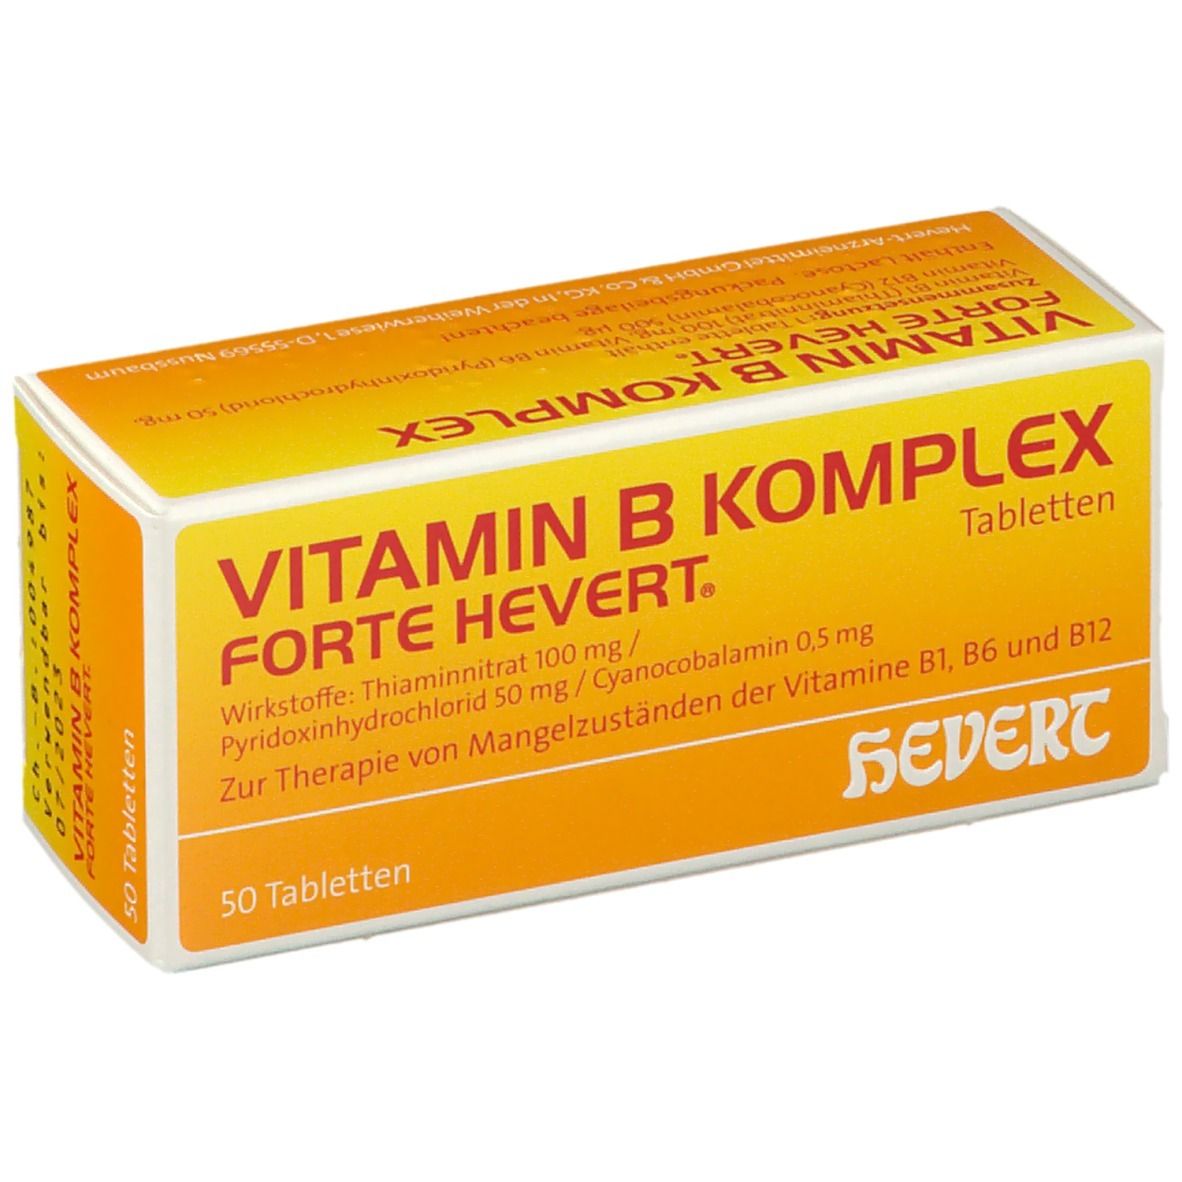 VITAMIN B KOMPLEX FORTE HEVERT® Tabletten